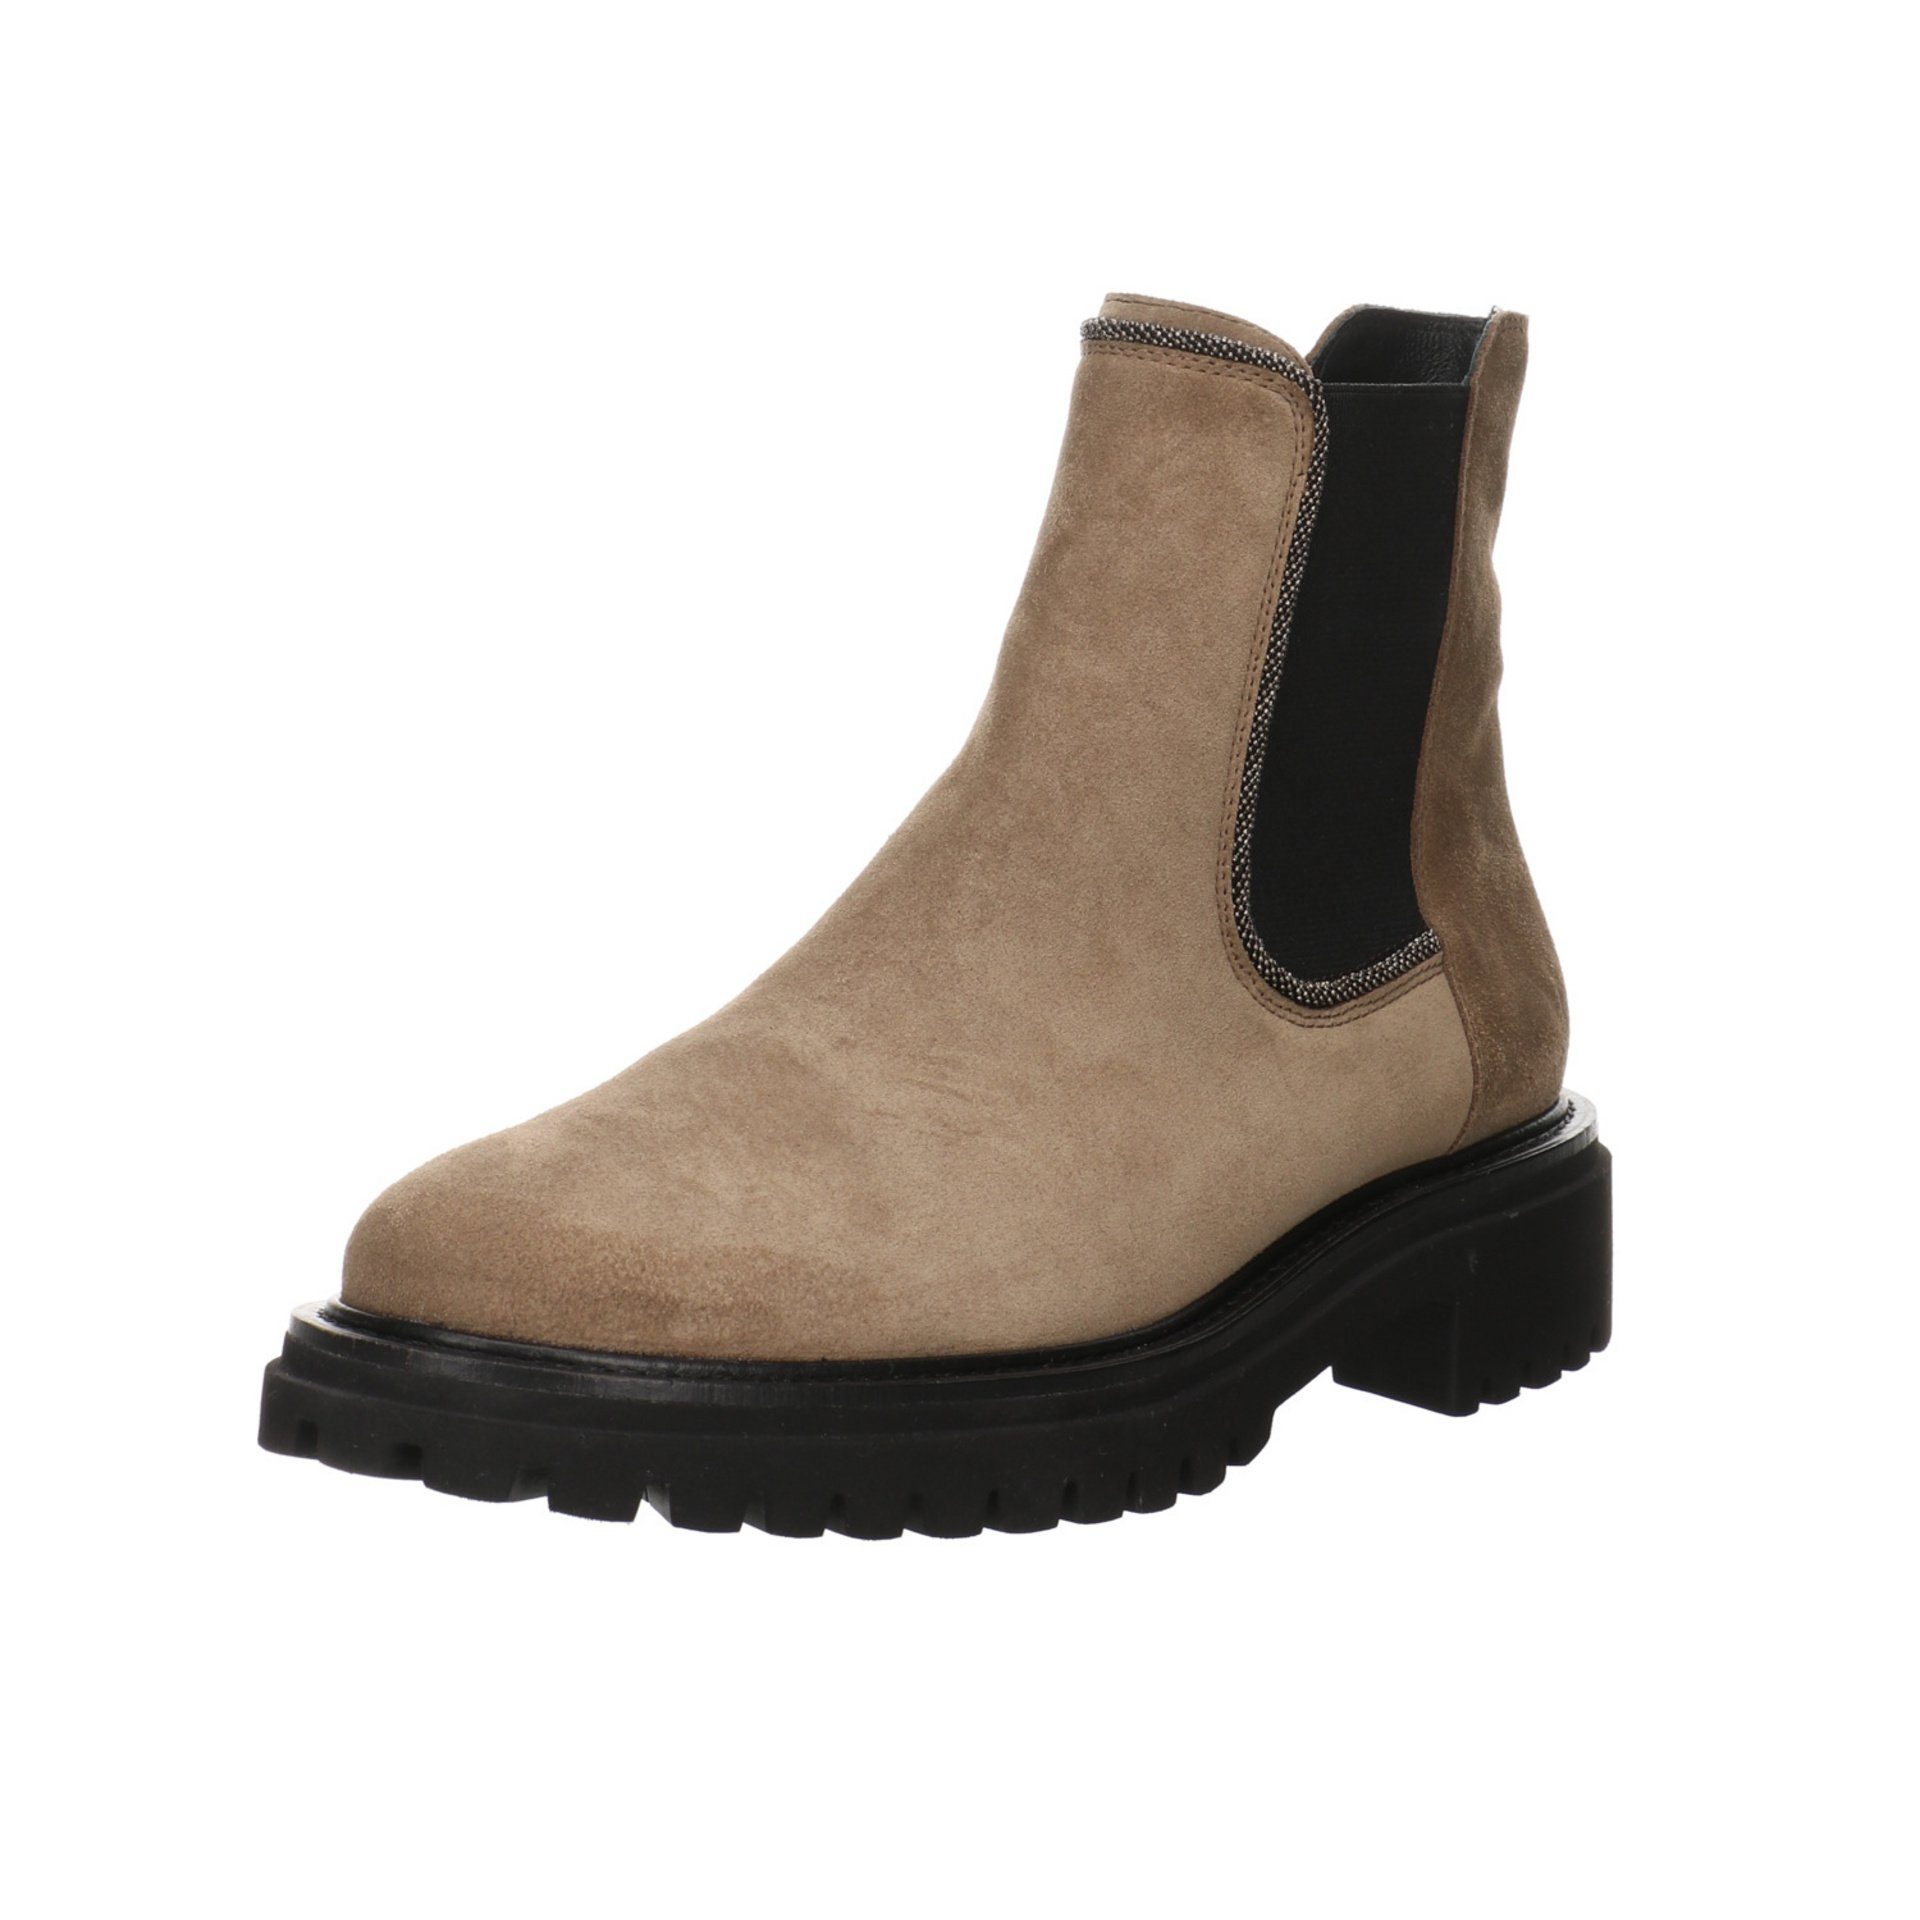 【Auffüllen】 Paul Green Chelsea Boots antelope uni Leder-/Textilkombination Chelseaboots Leder-/Textilkombination